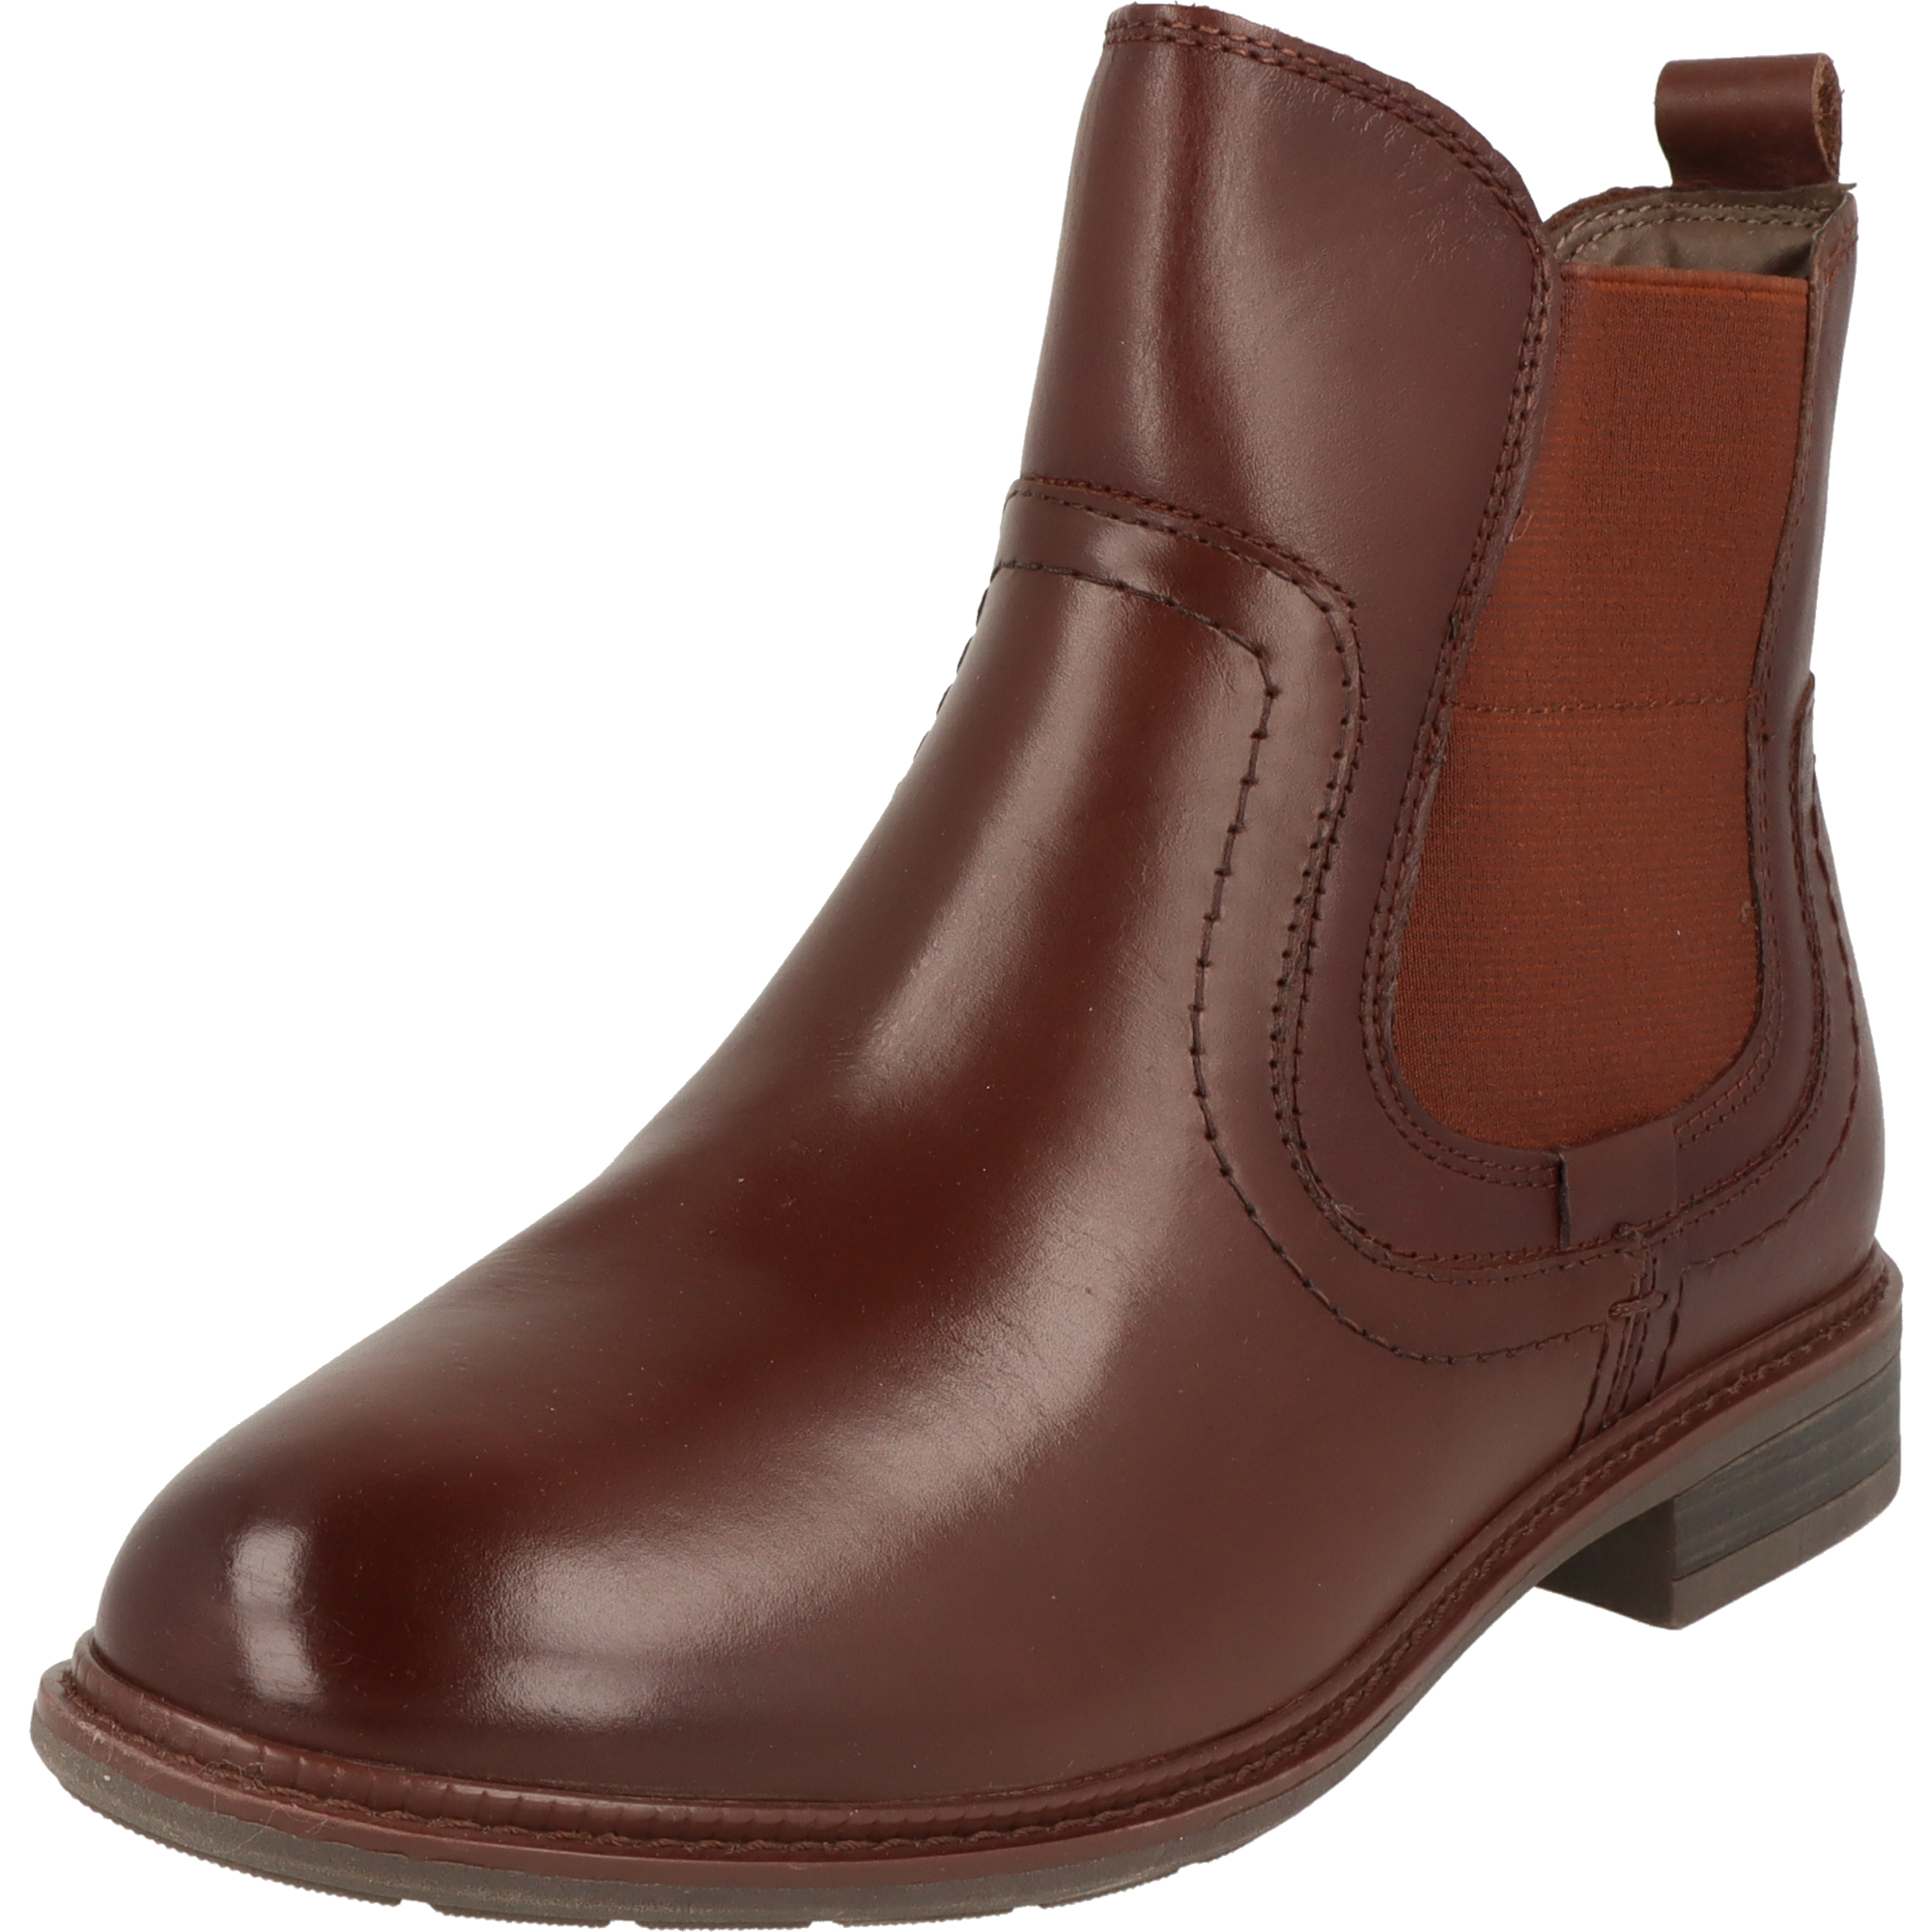 Tamaris Comfort 8-85212-41 Damen Schuhe Chelsea Boots Leder Stiefel Cognac